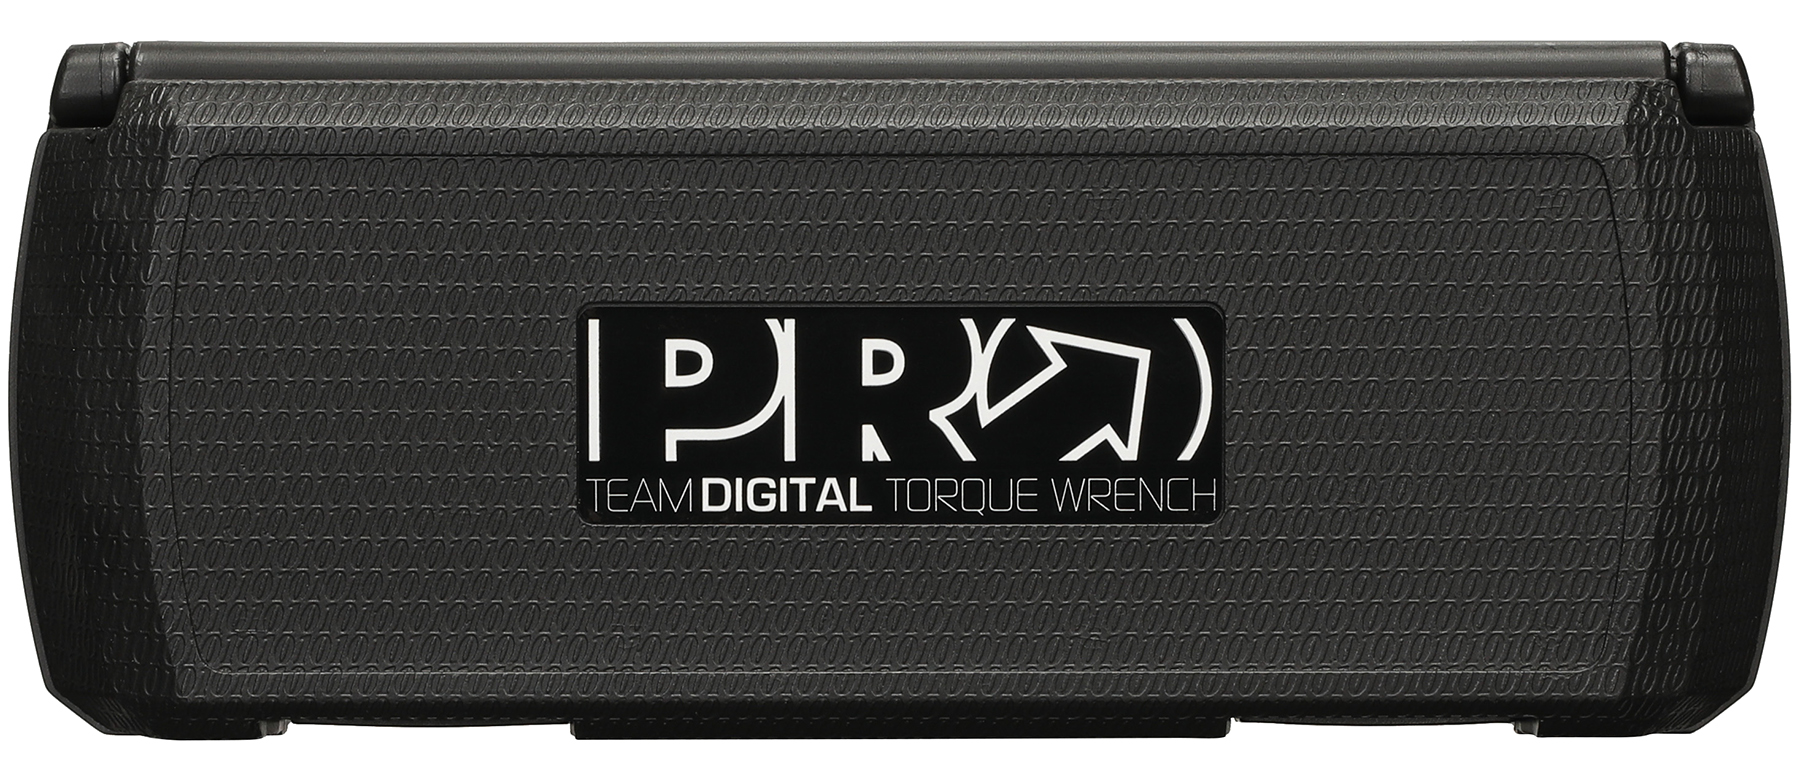 PRO Team Digital Torque Wrench